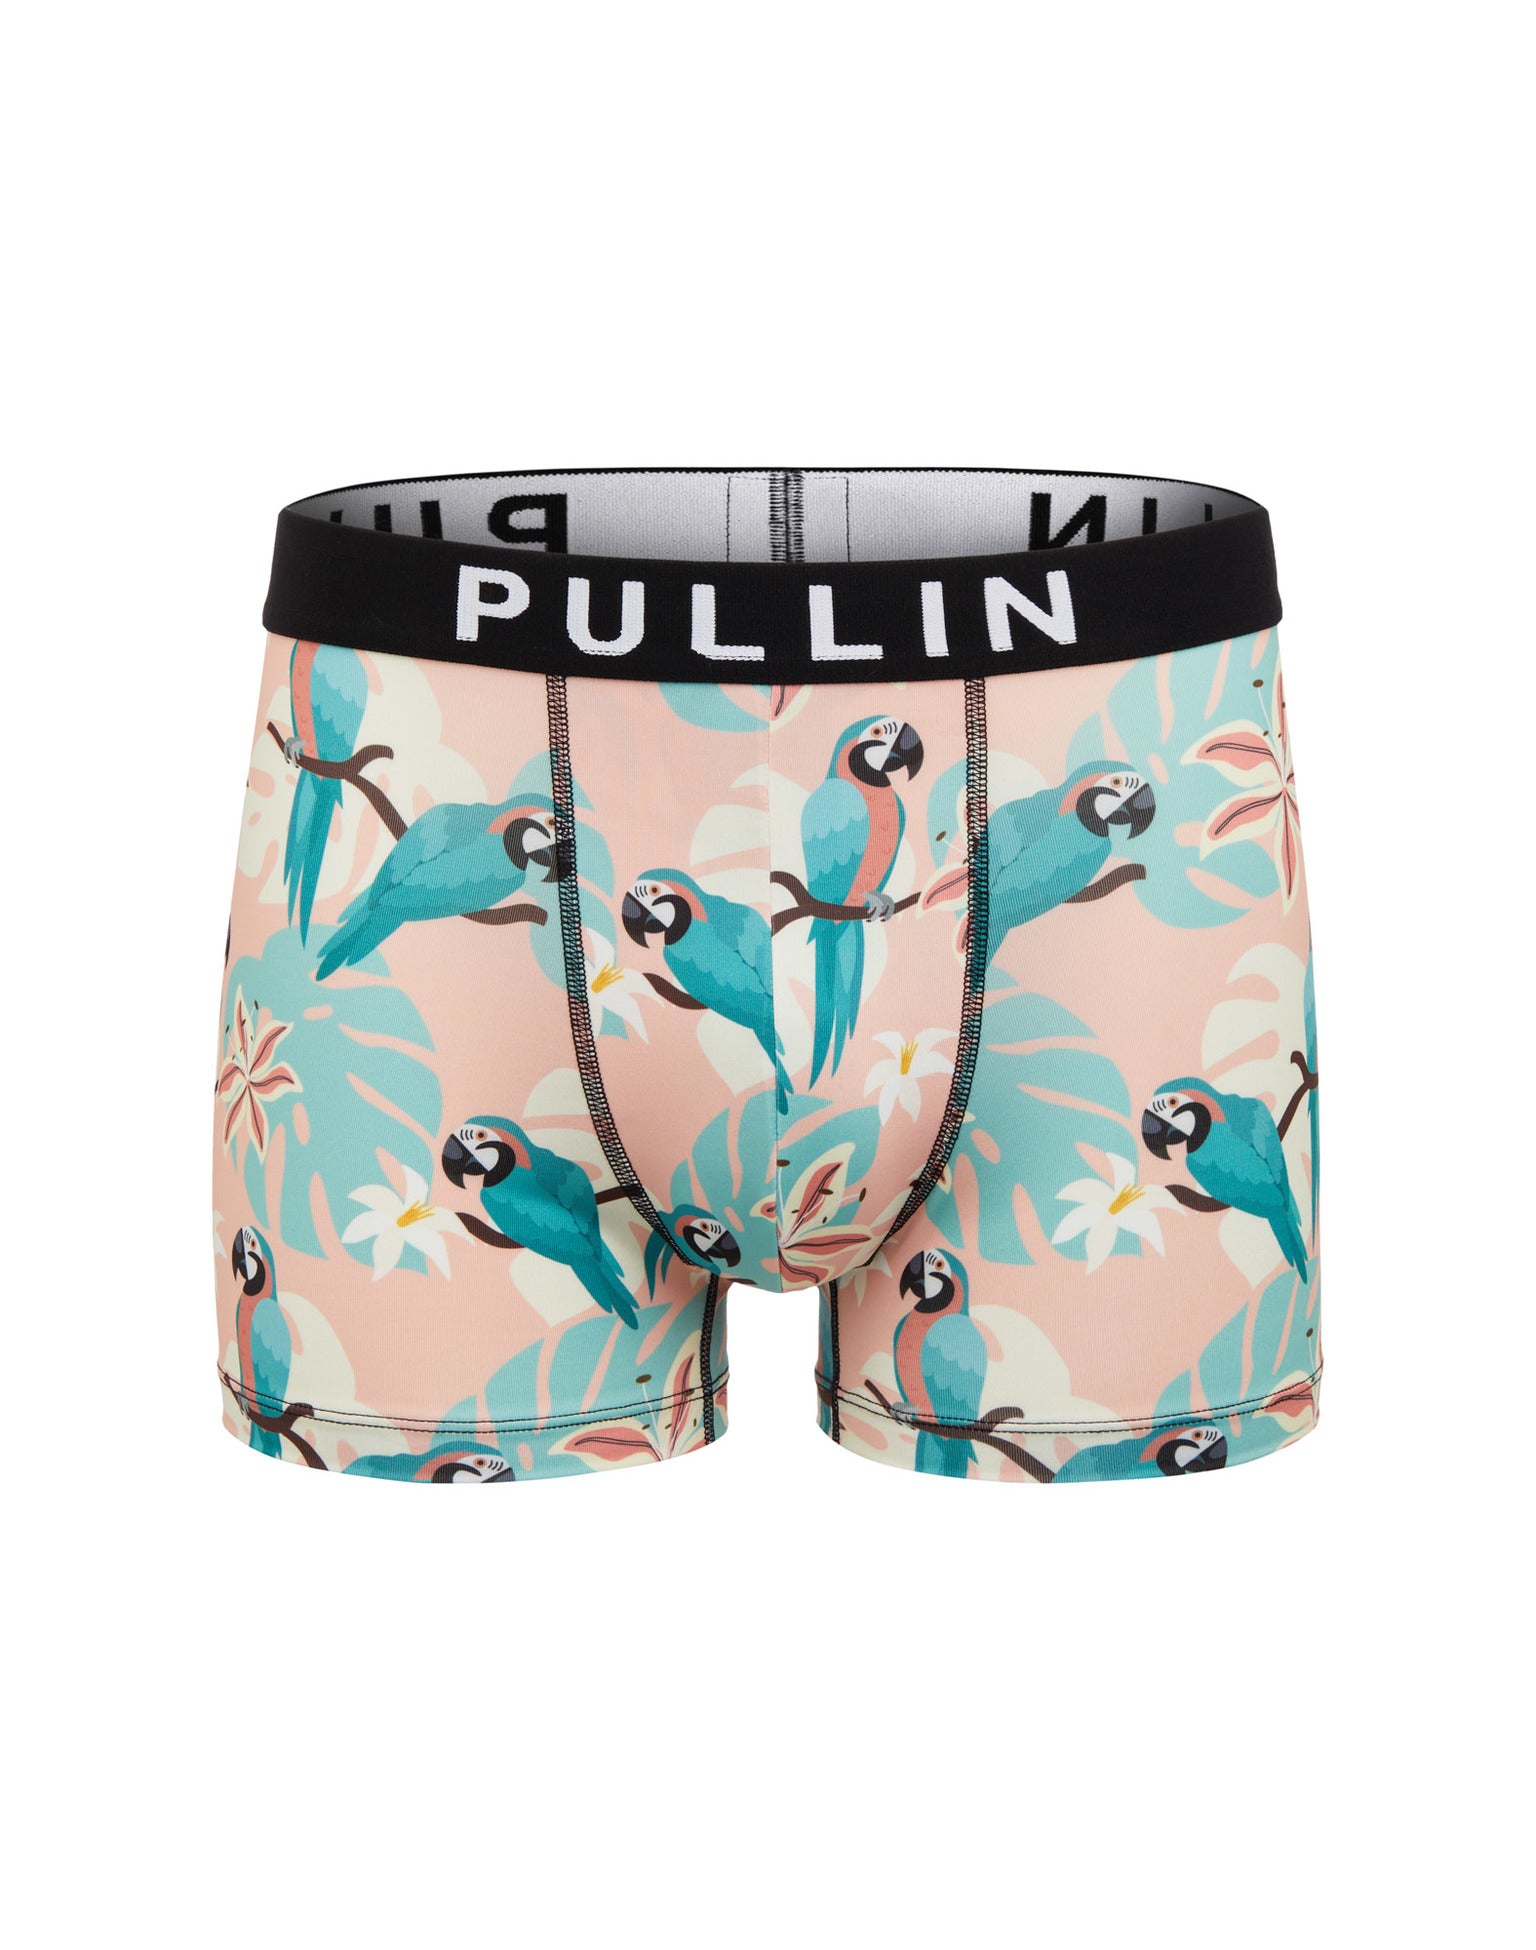 Pullin Men’s Master Parro Dise parrot 🦜 print Underwear